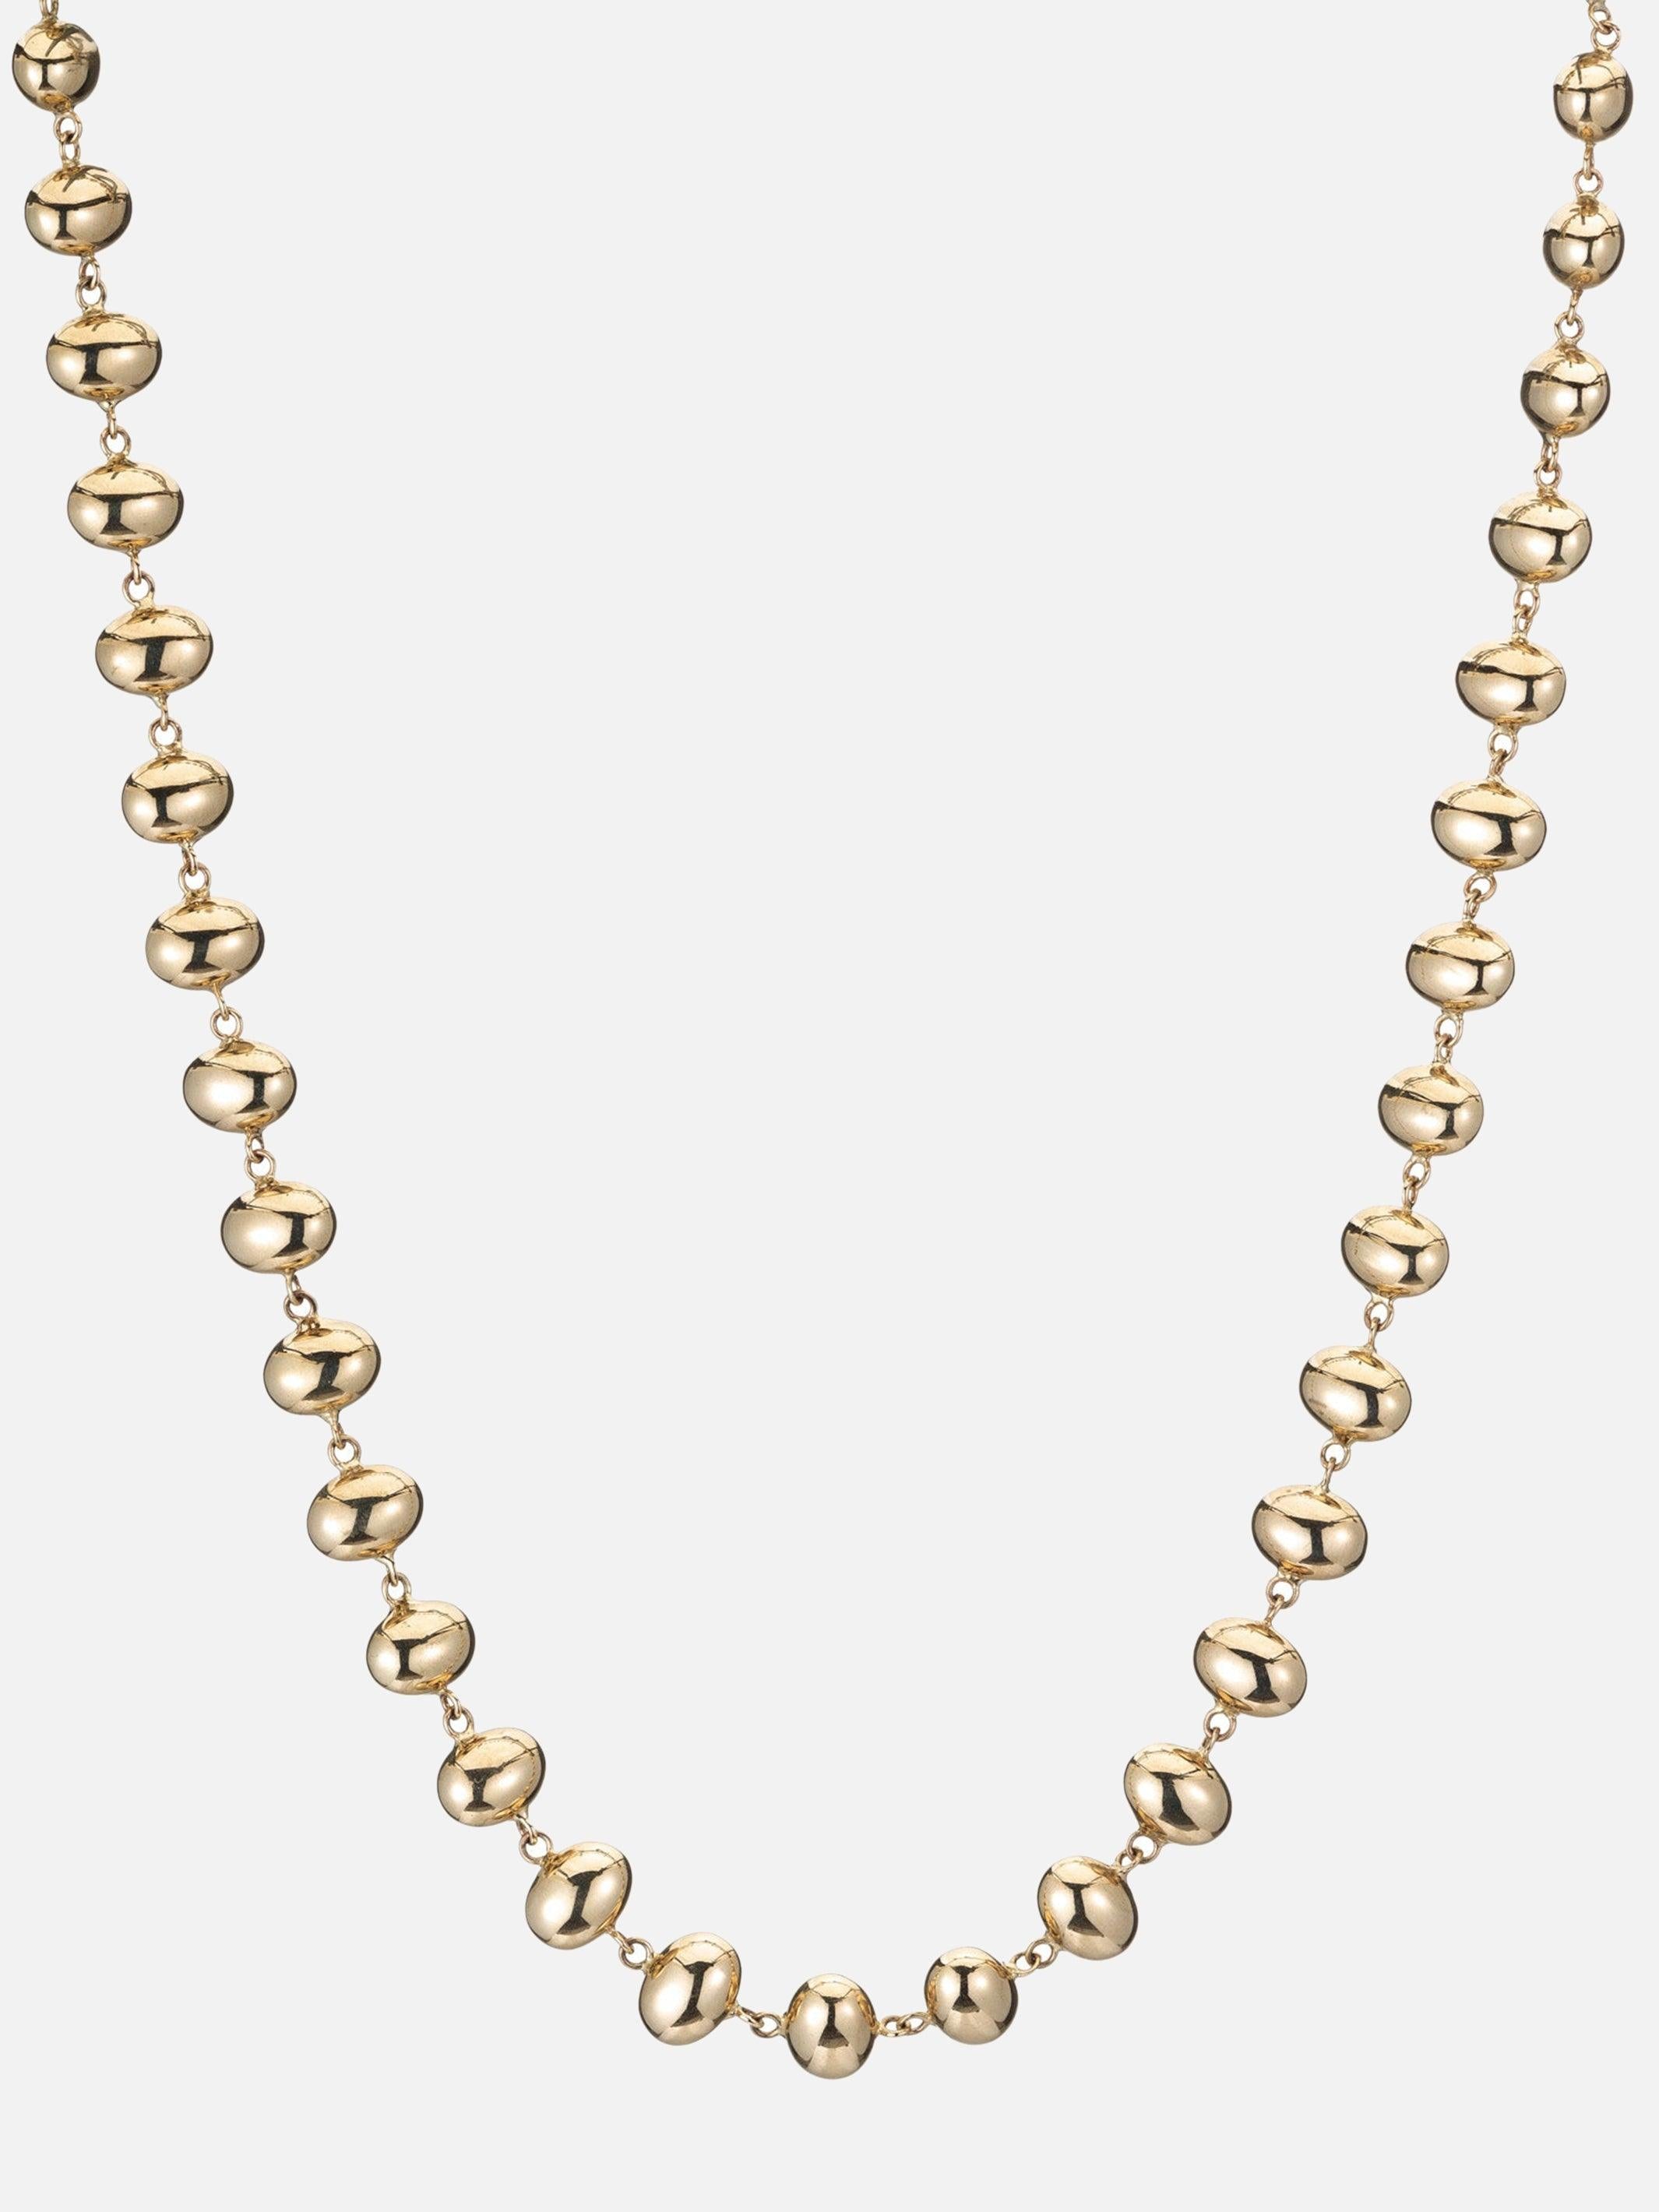 Helium Ellipse Necklace - Ariel Gordon Jewelry - At Present